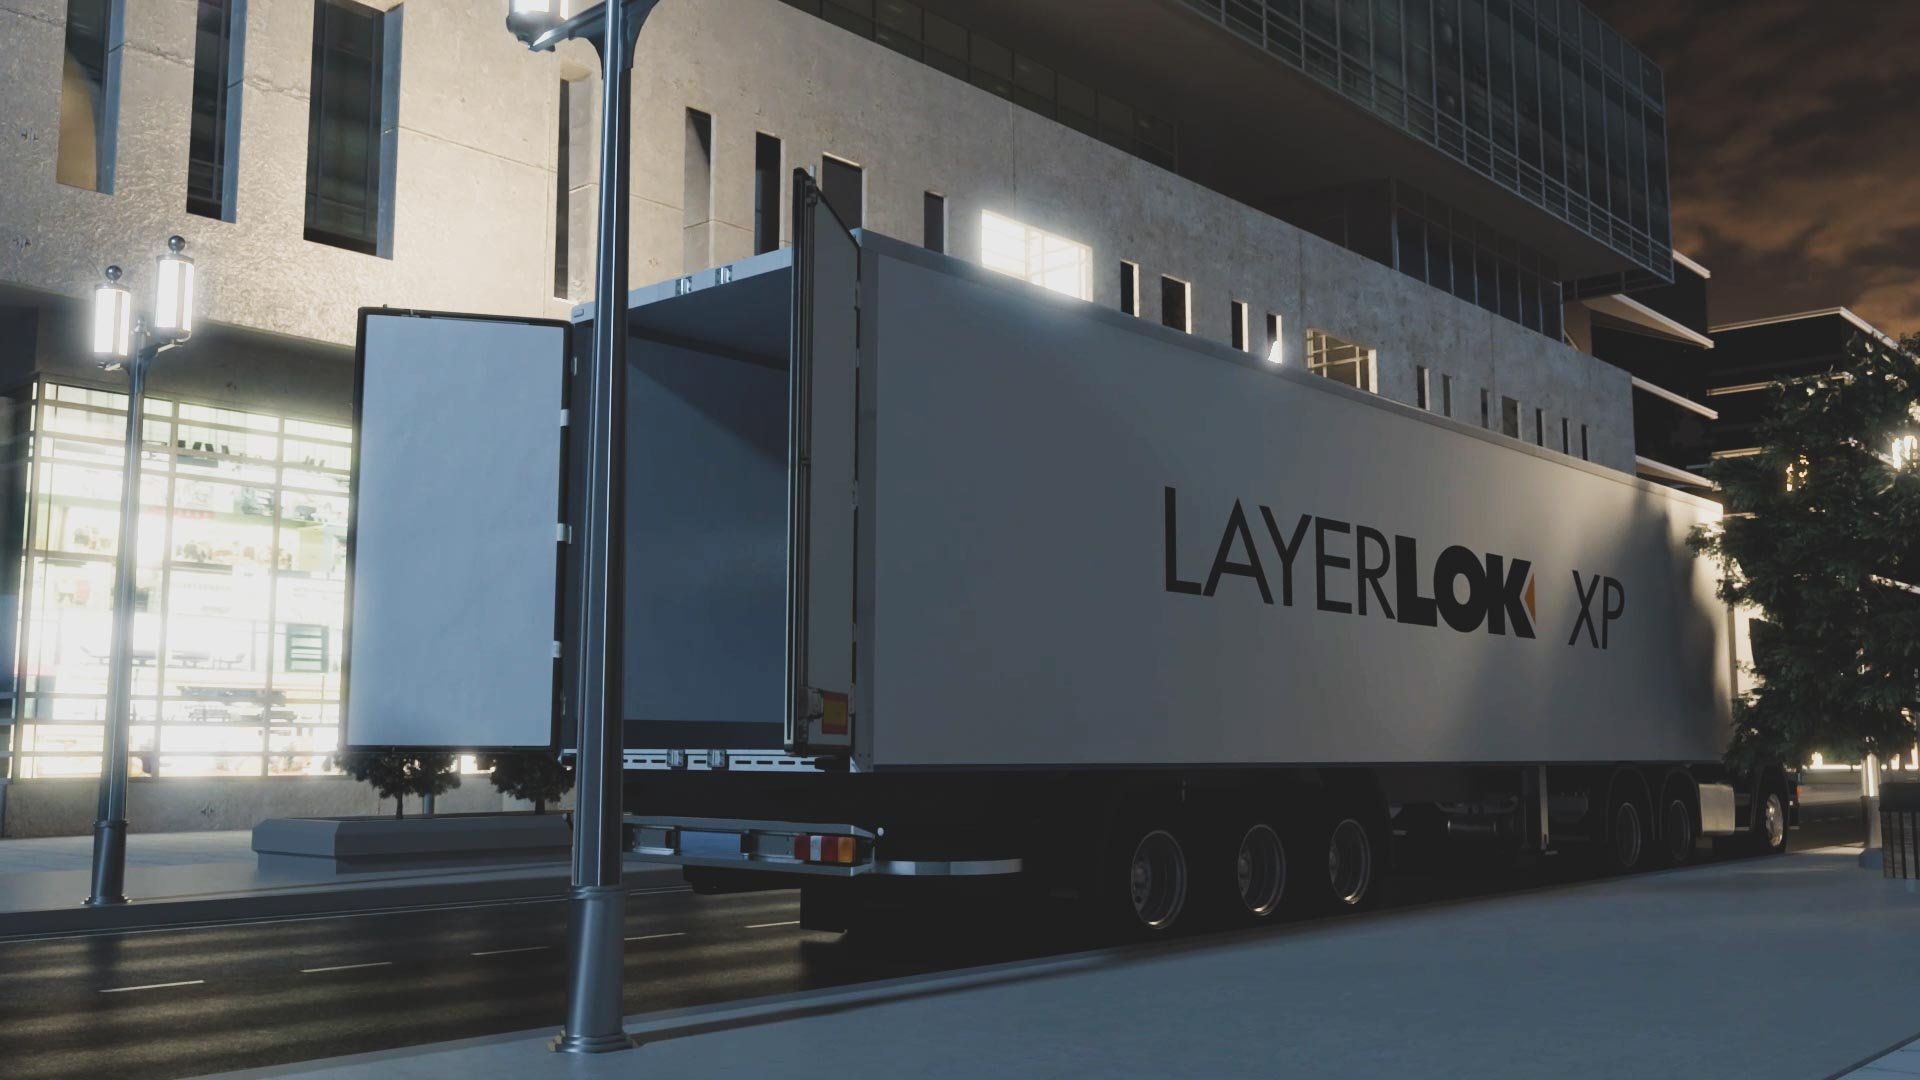 LayerLok XP - double decking solution by LoadLok